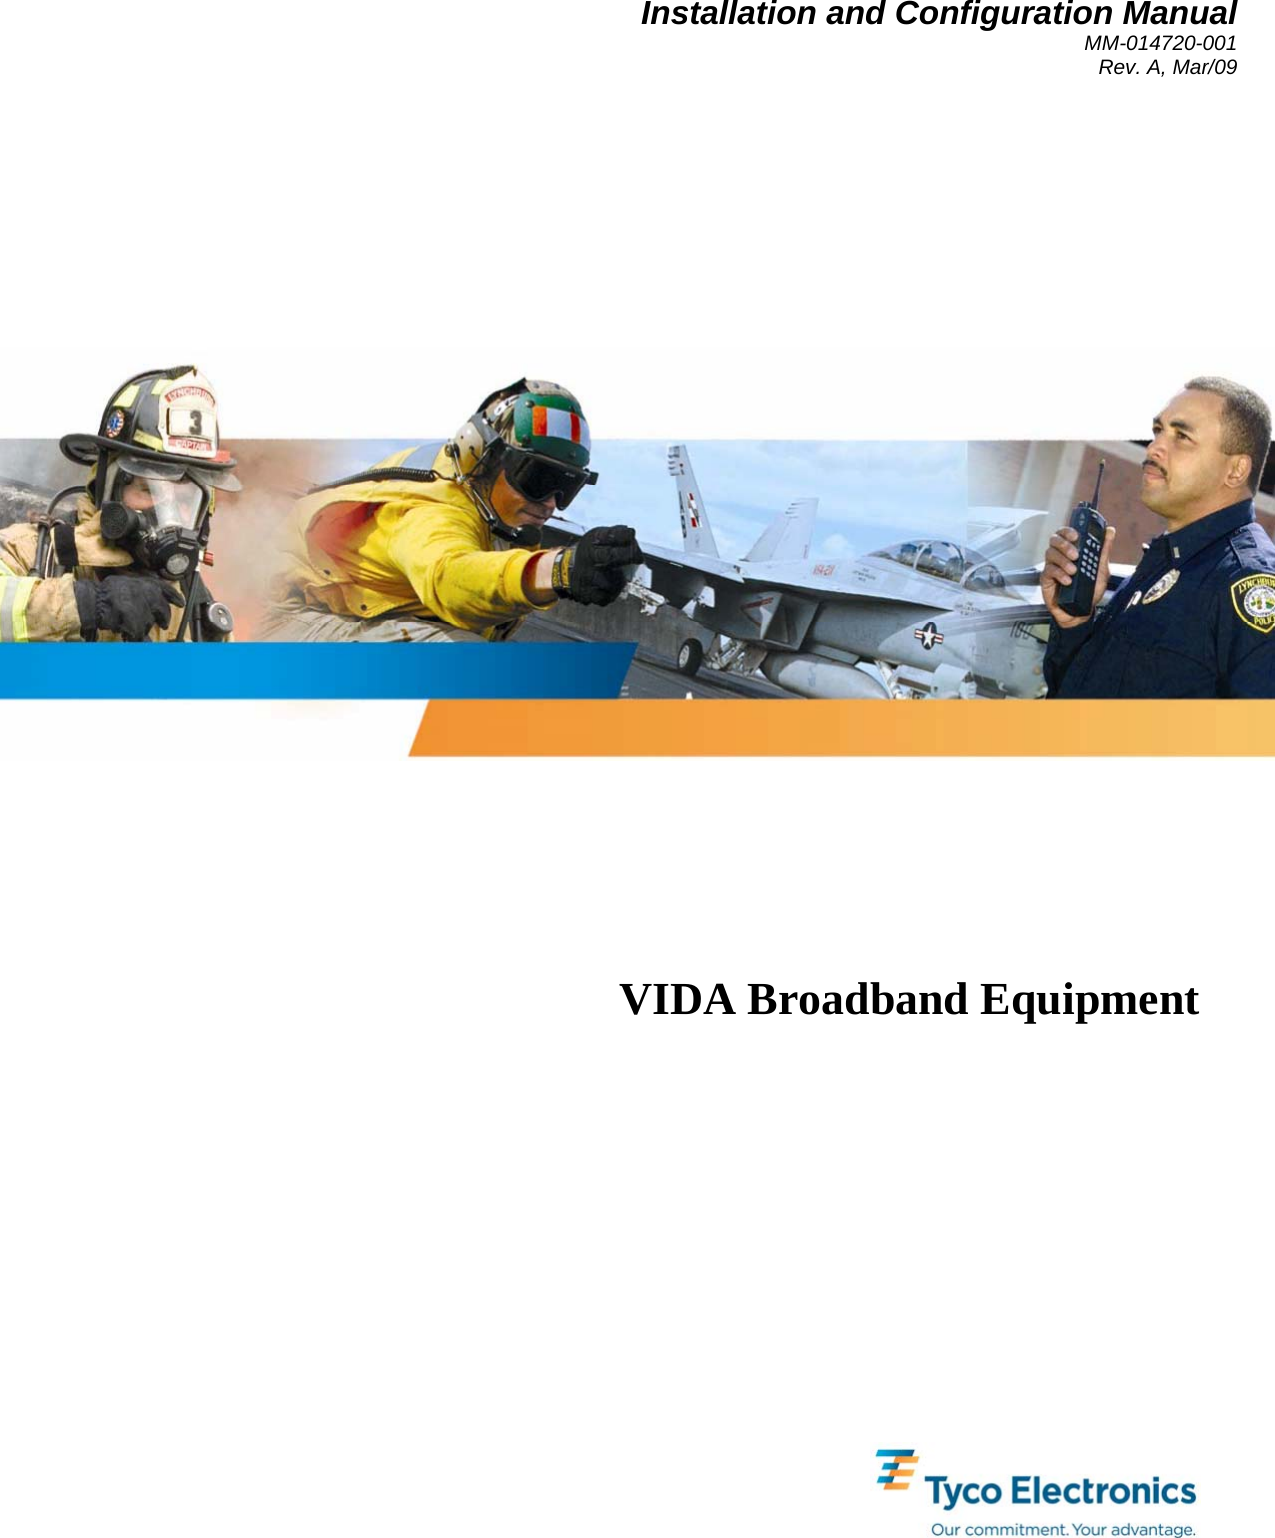 Installation and Configuration Manual MM-014720-001 Rev. A, Mar/09      VIDA Broadband Equipment  